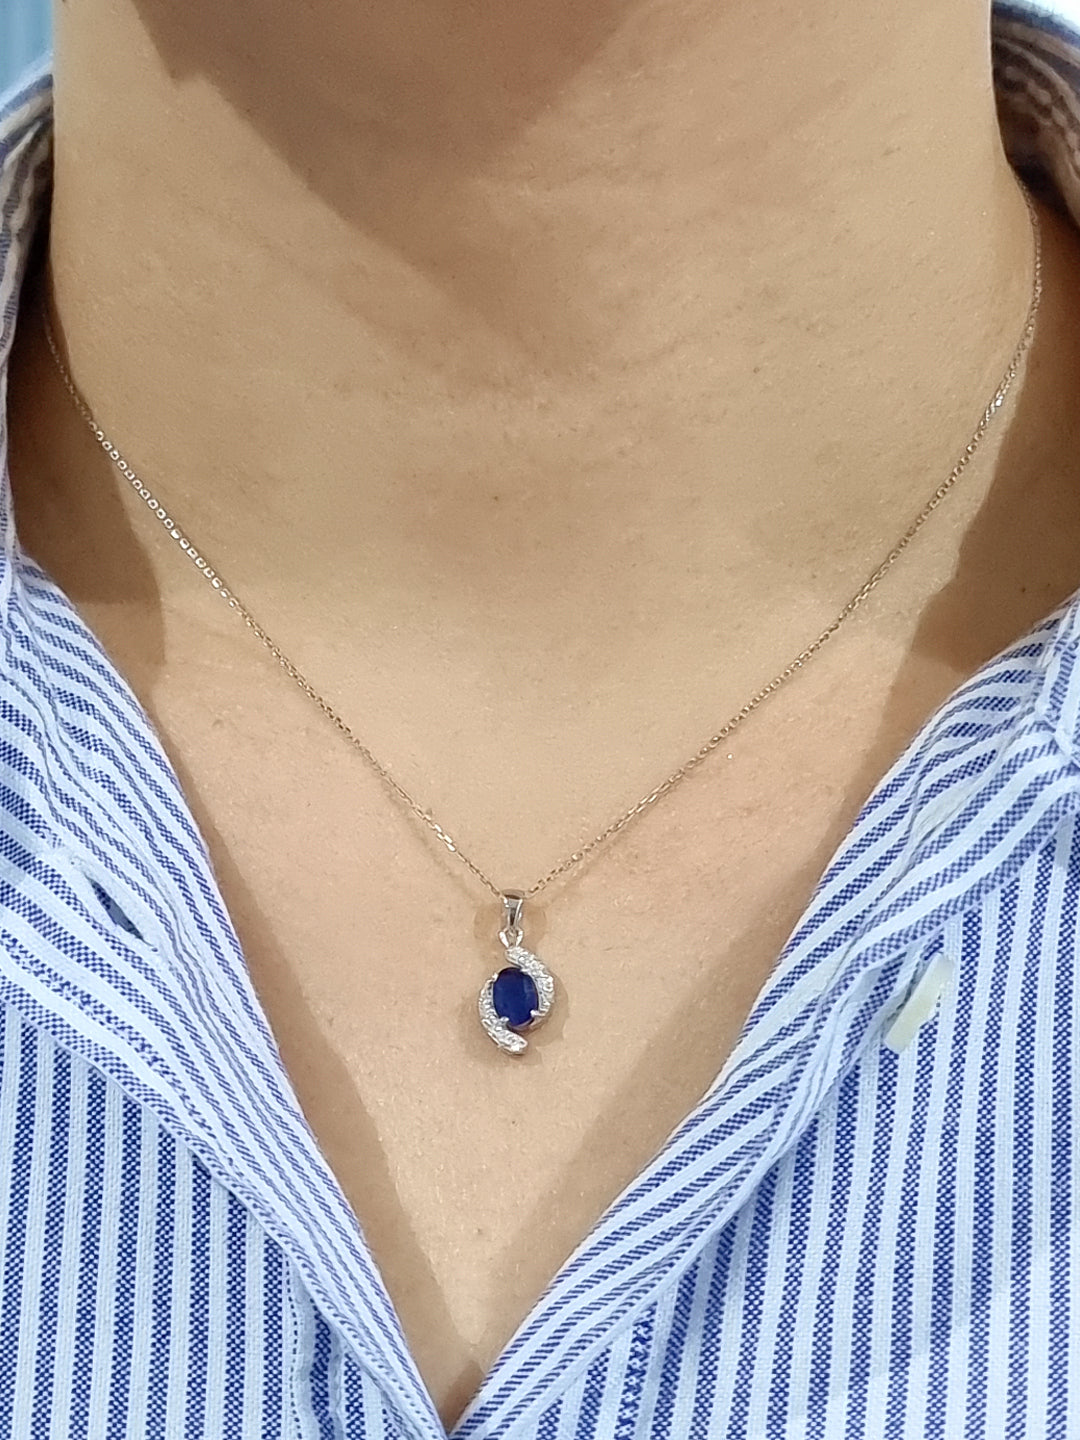 Petite Blue Sapphire And Diamond Pendant In 18k White Gold.